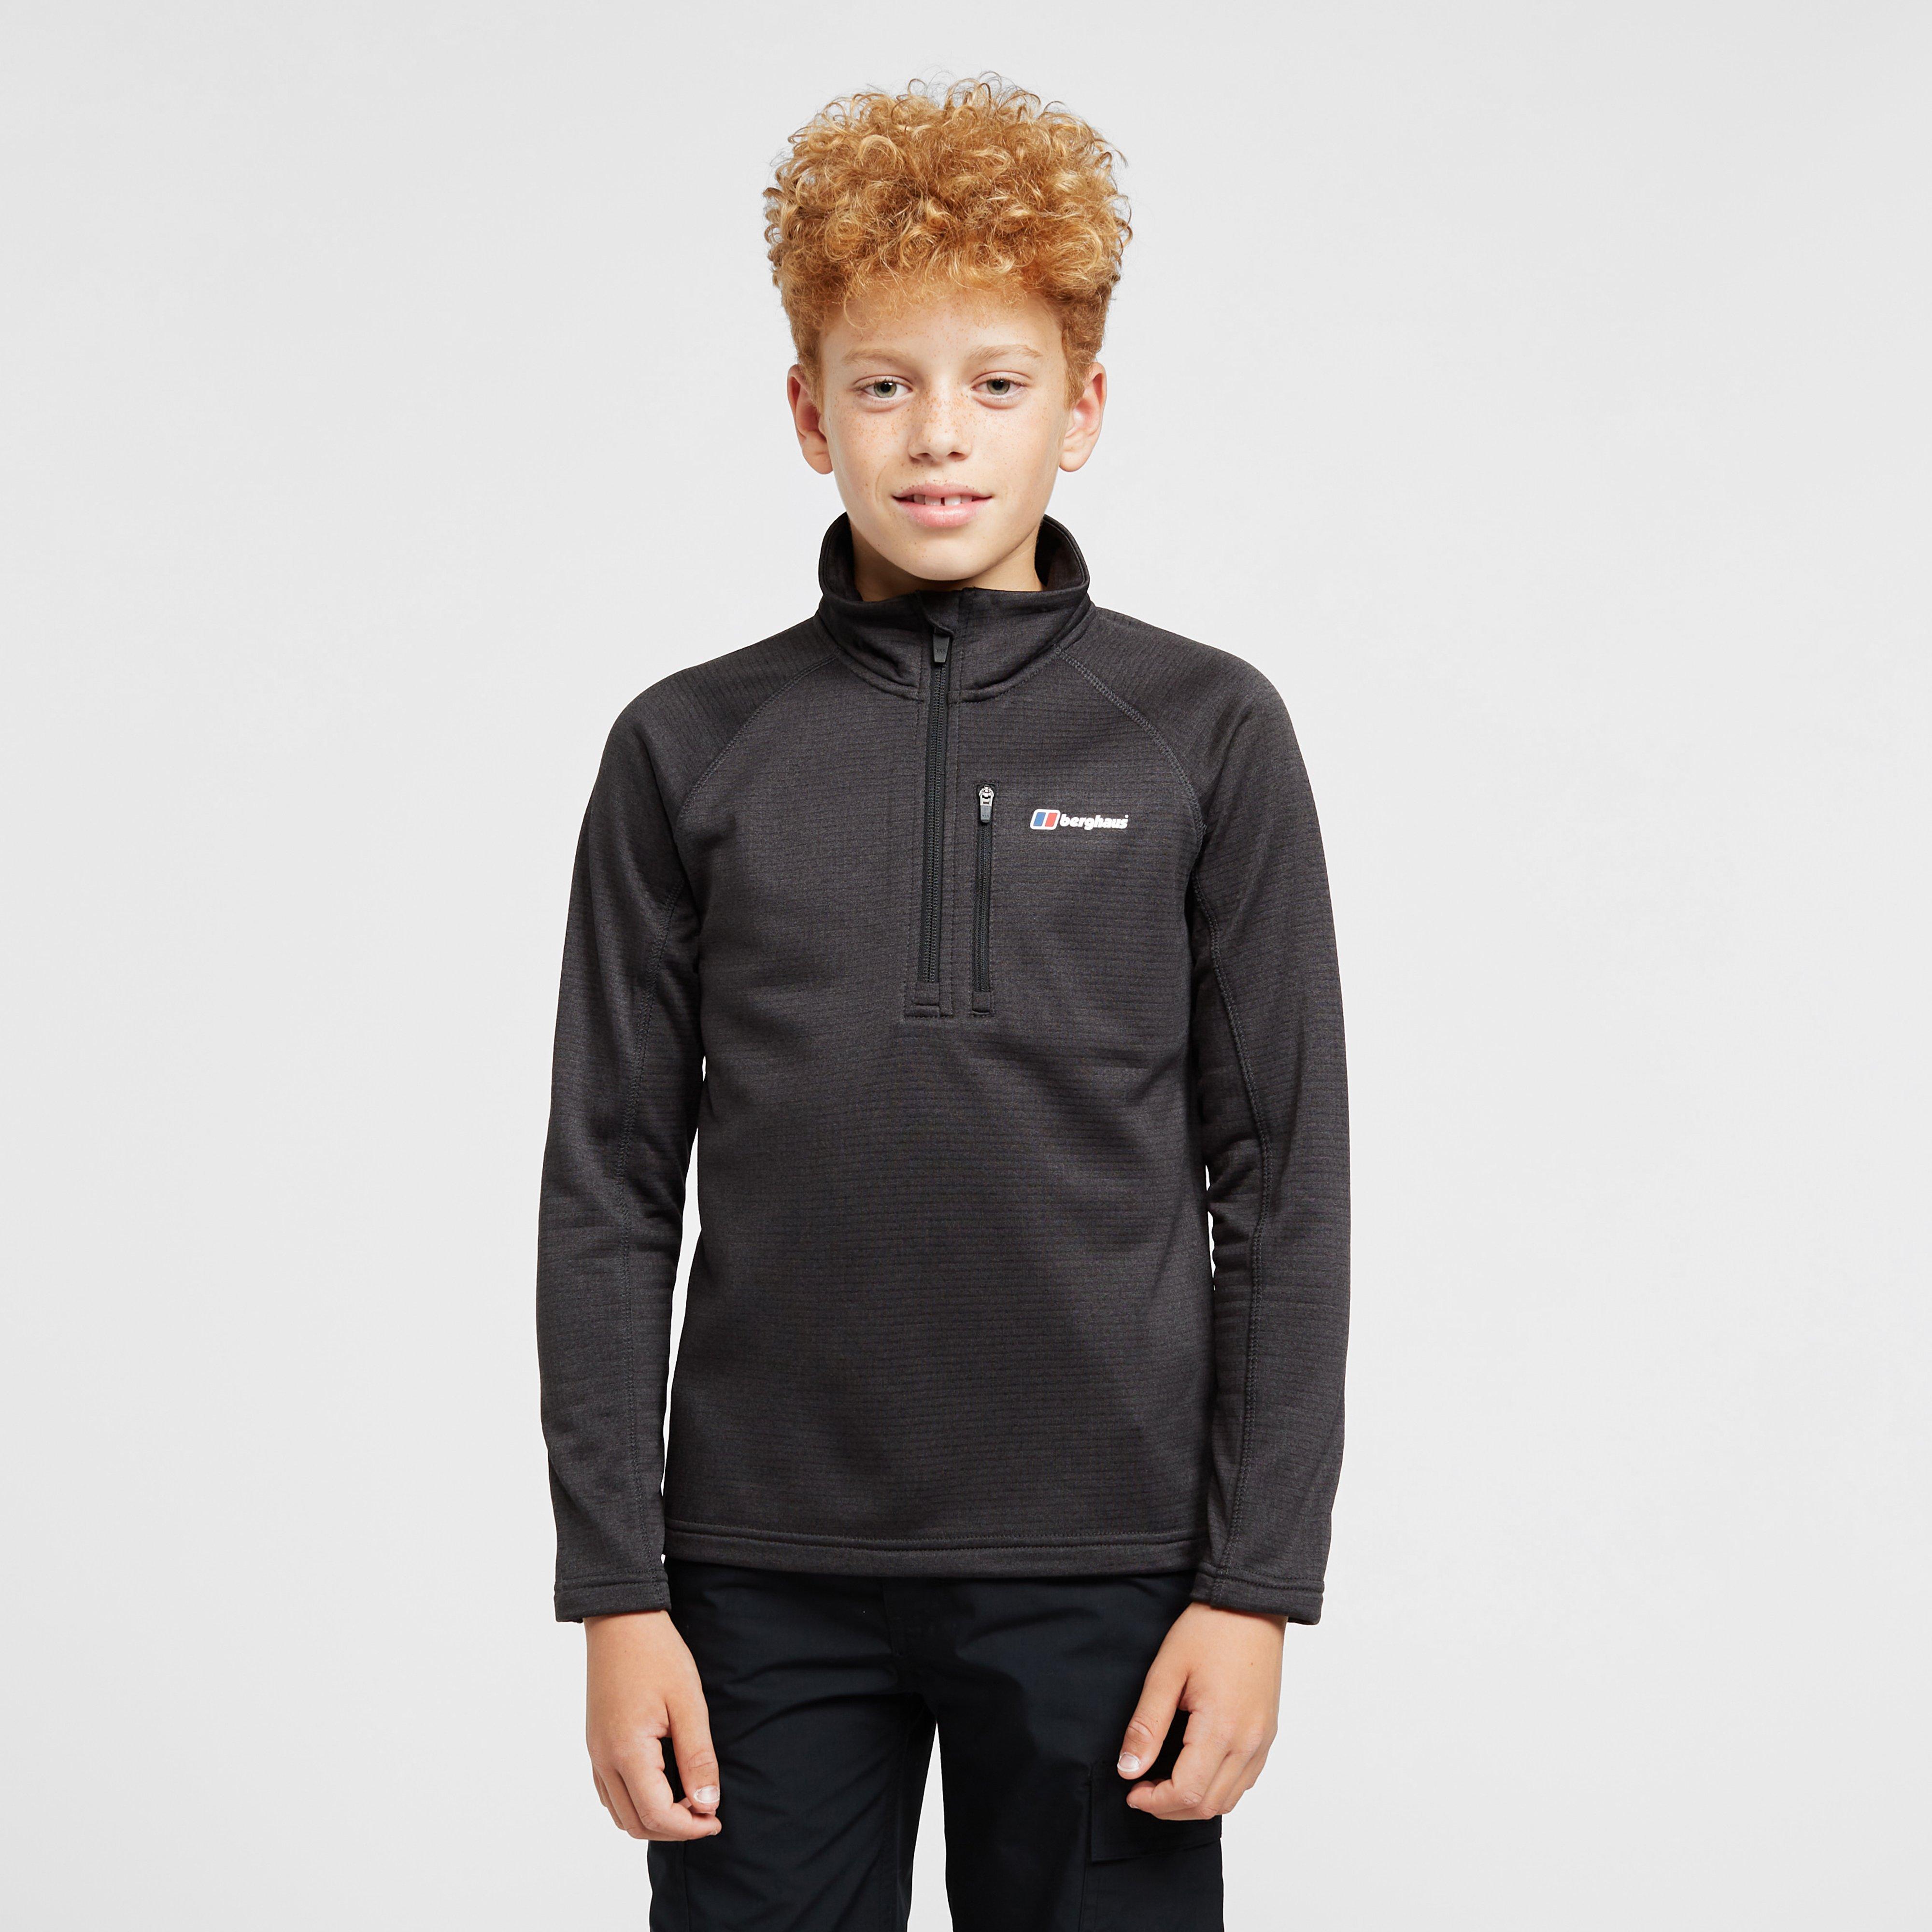 Berghaus Kids' Half-Zip Grid Fleece, Black